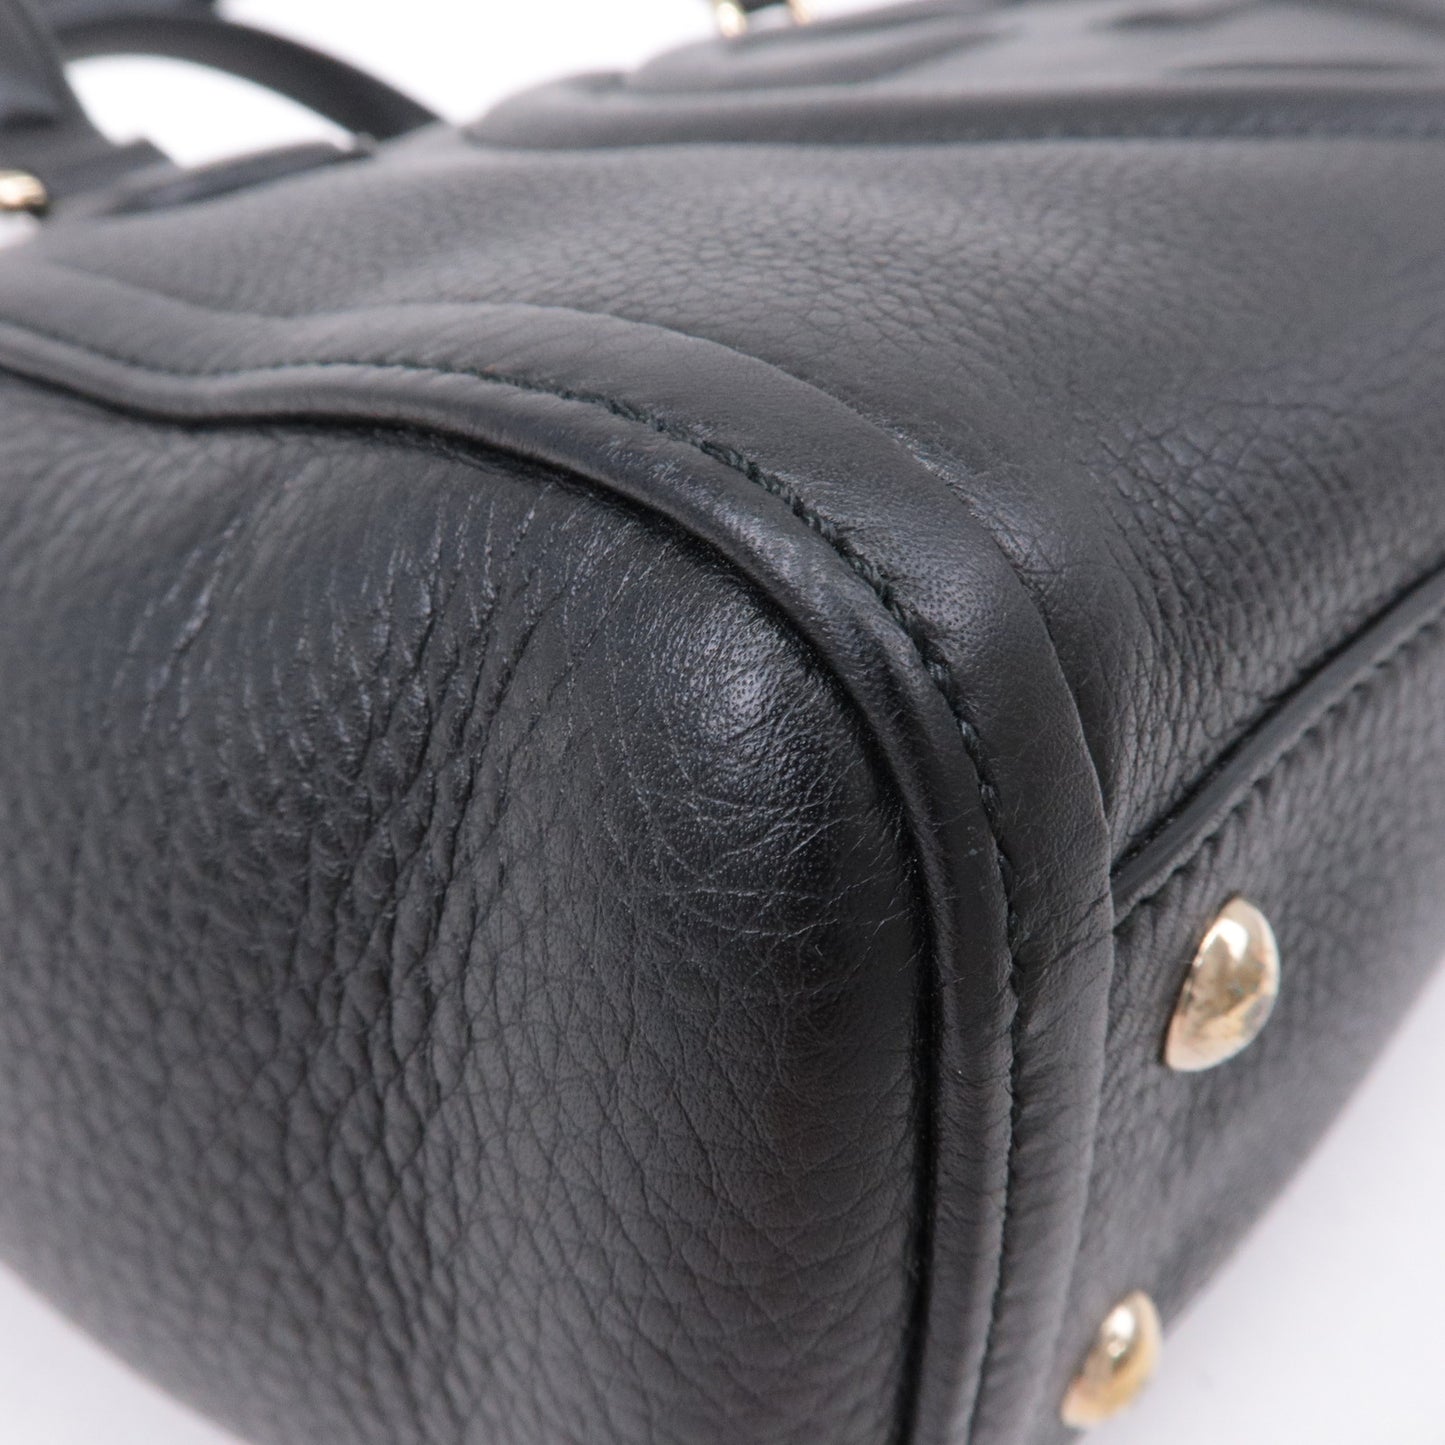 GUCCI SOHO Interlocking Leather Tote Bag Noir Black 282307